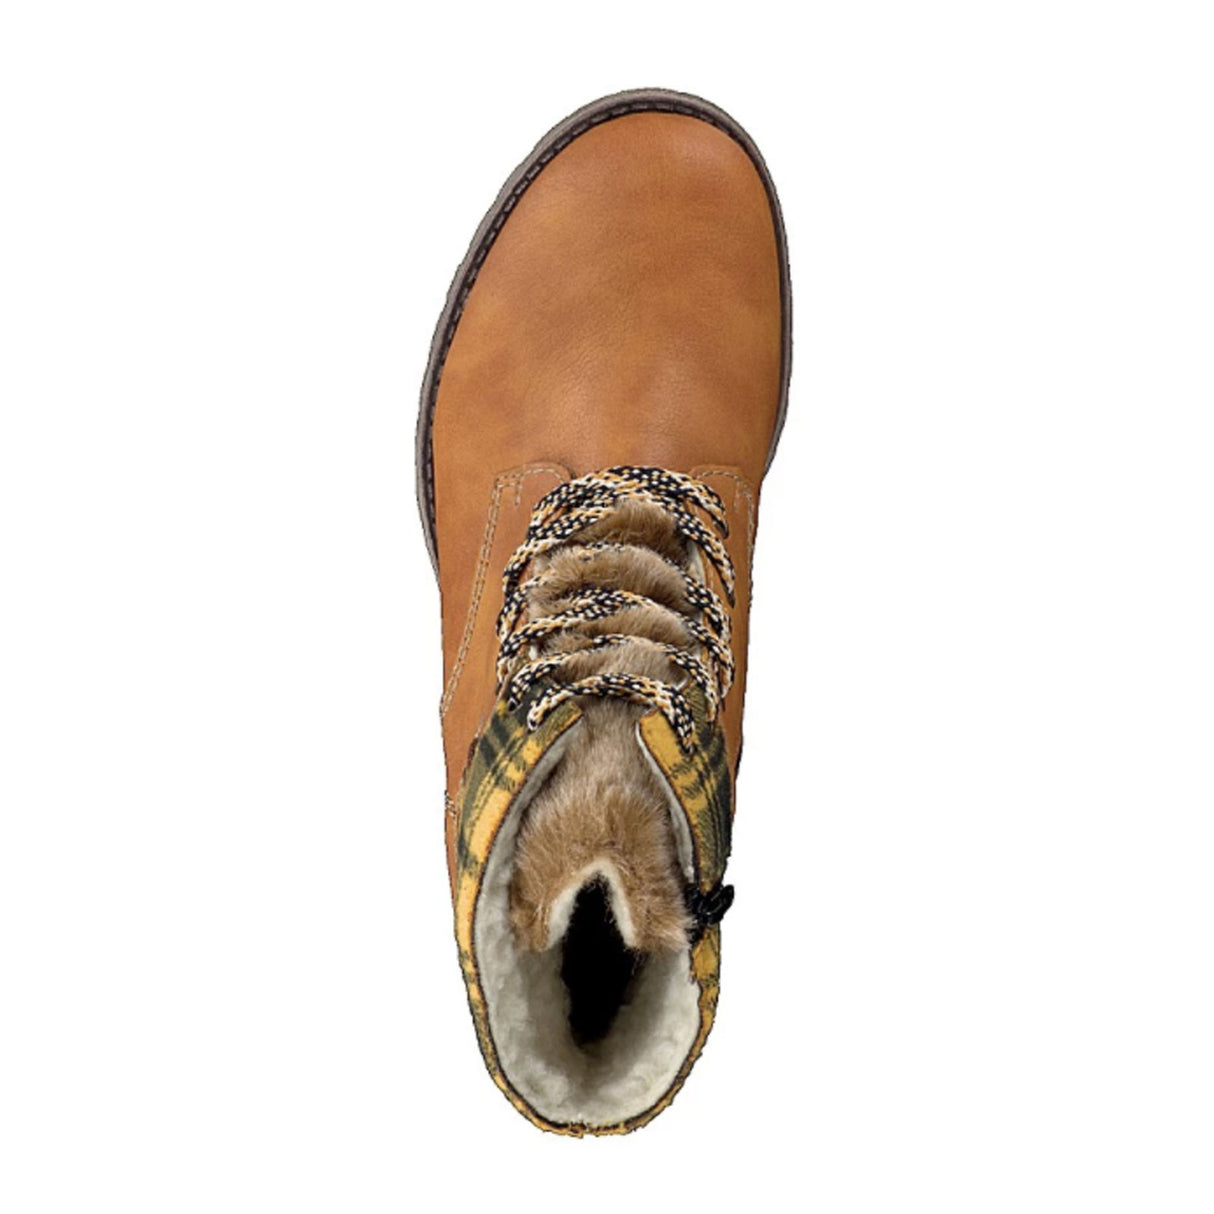 Rieker 785G1-68 Mid Boot (Women) - Ocker/Yellow-Black/Steppe Boots - Fashion - Mid Boot - The Heel Shoe Fitters